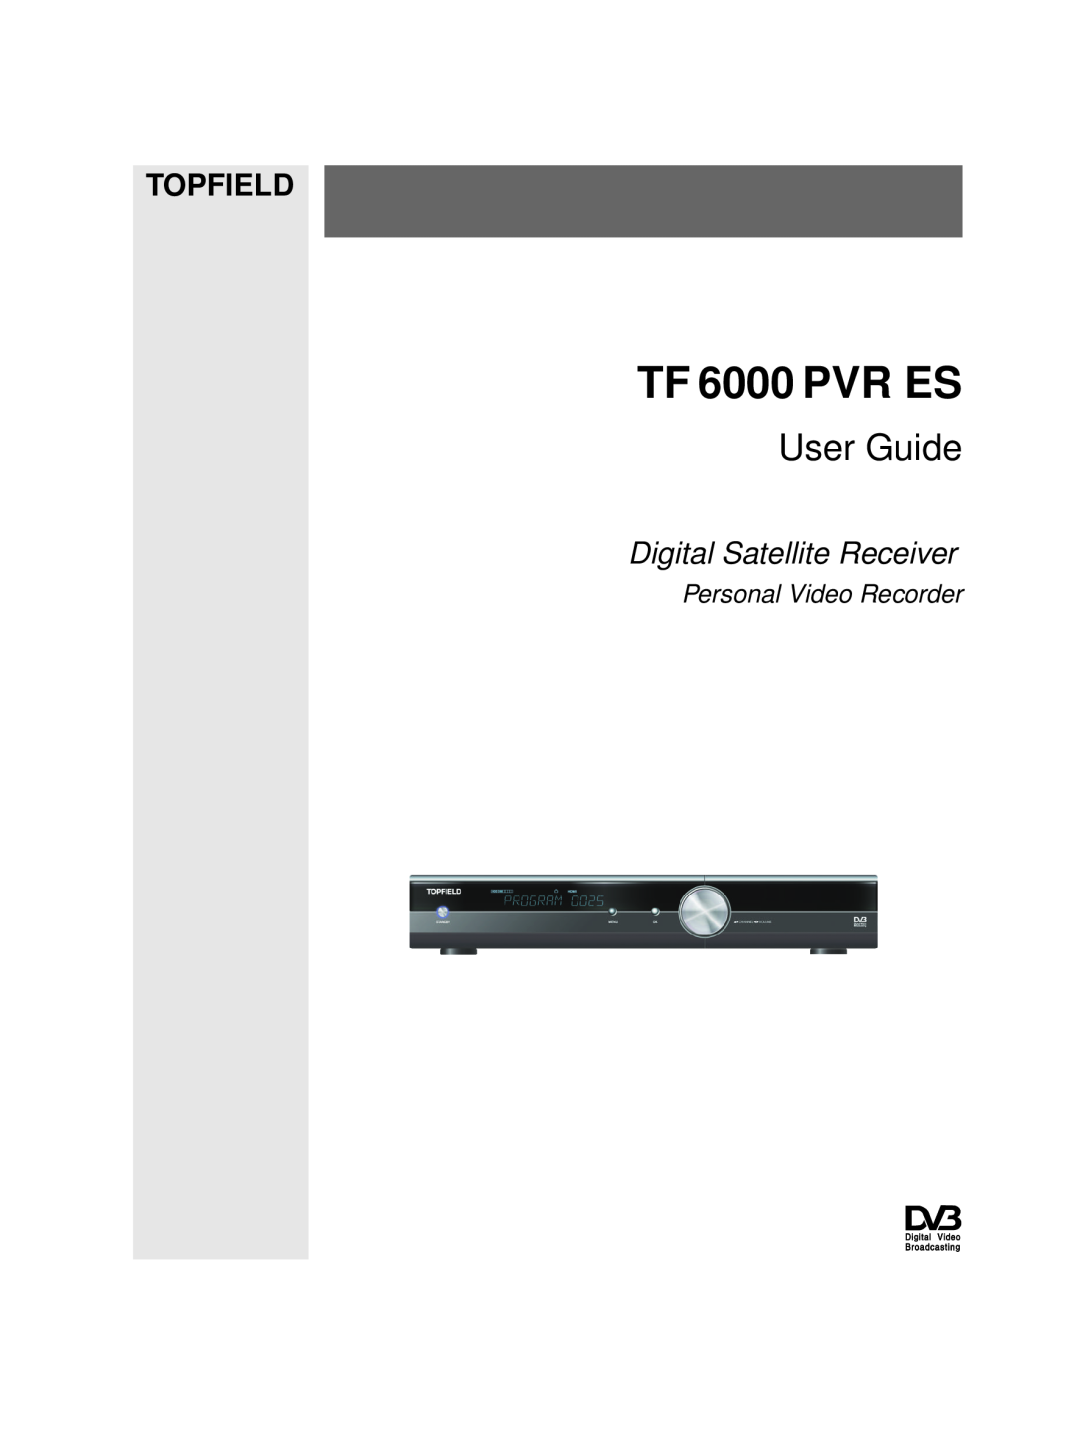 Topfield TF 6000 PVR ES manual Personal Video Recorder, User Guide, Topfield, Digital Satellite Receiver 